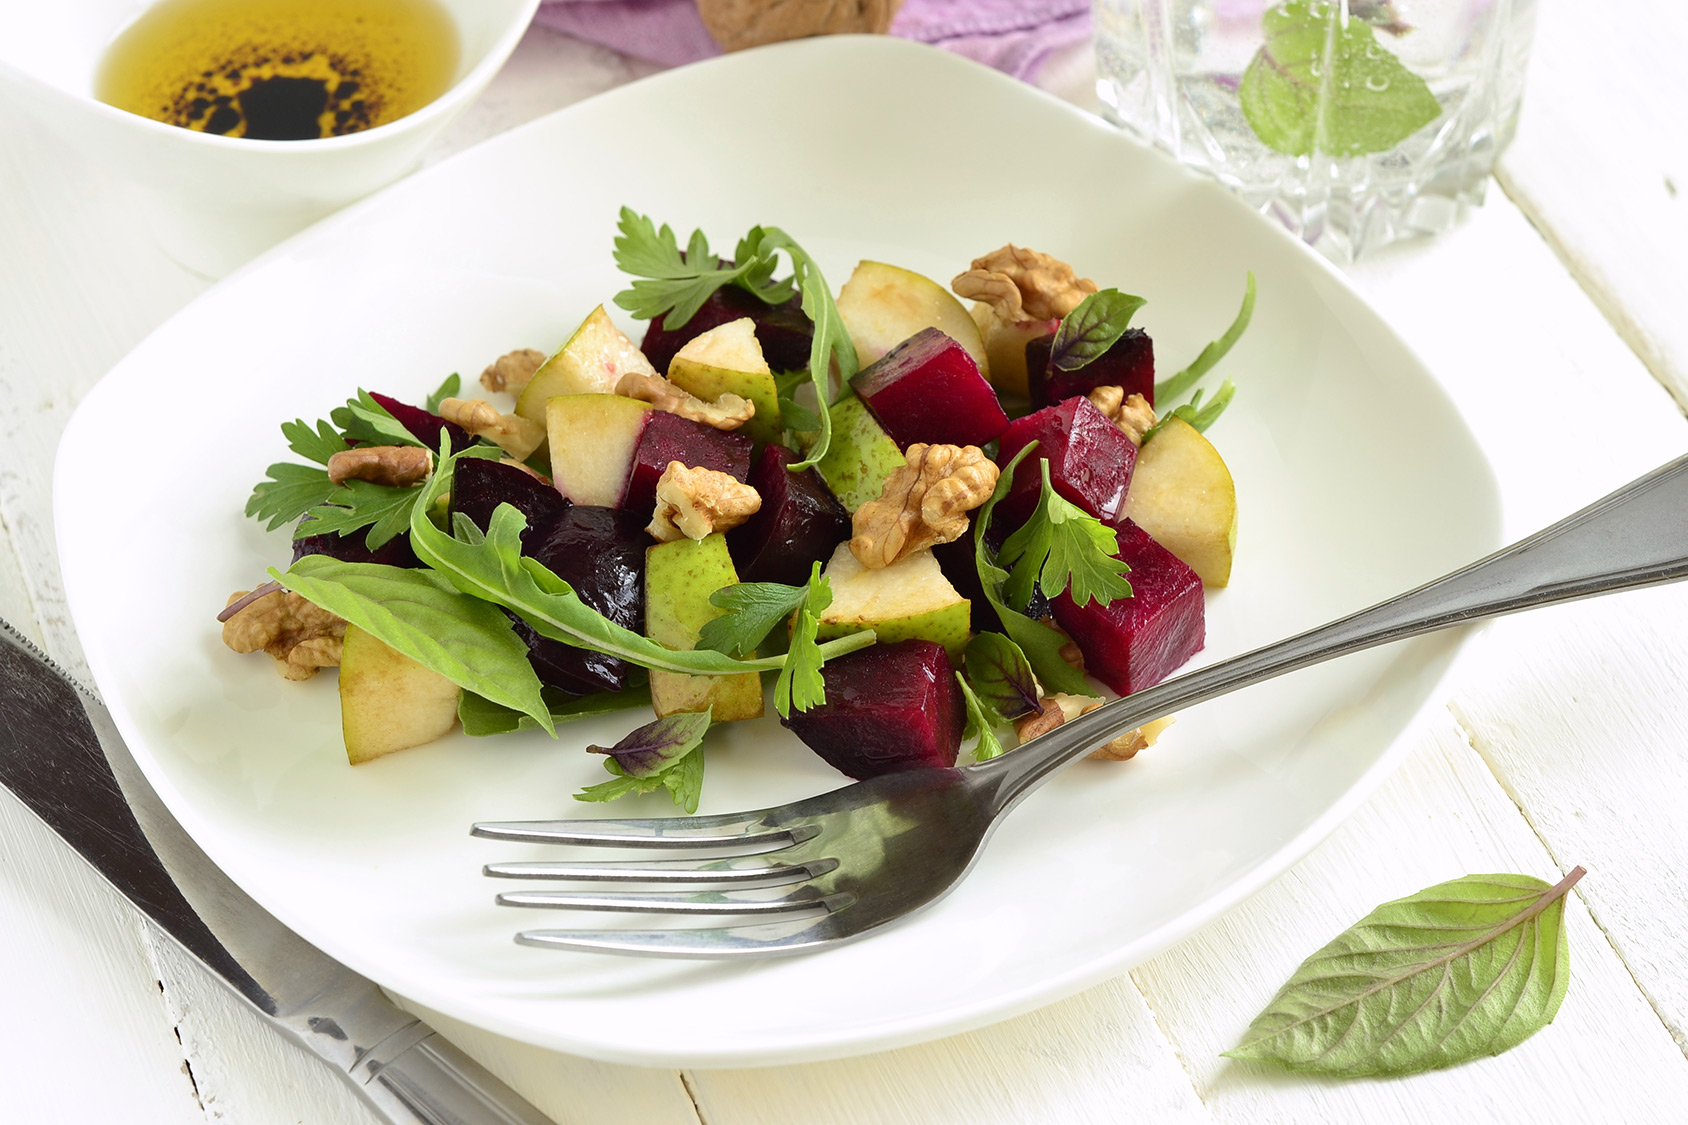 SPRING RECIPE: Roasted Beet Salad